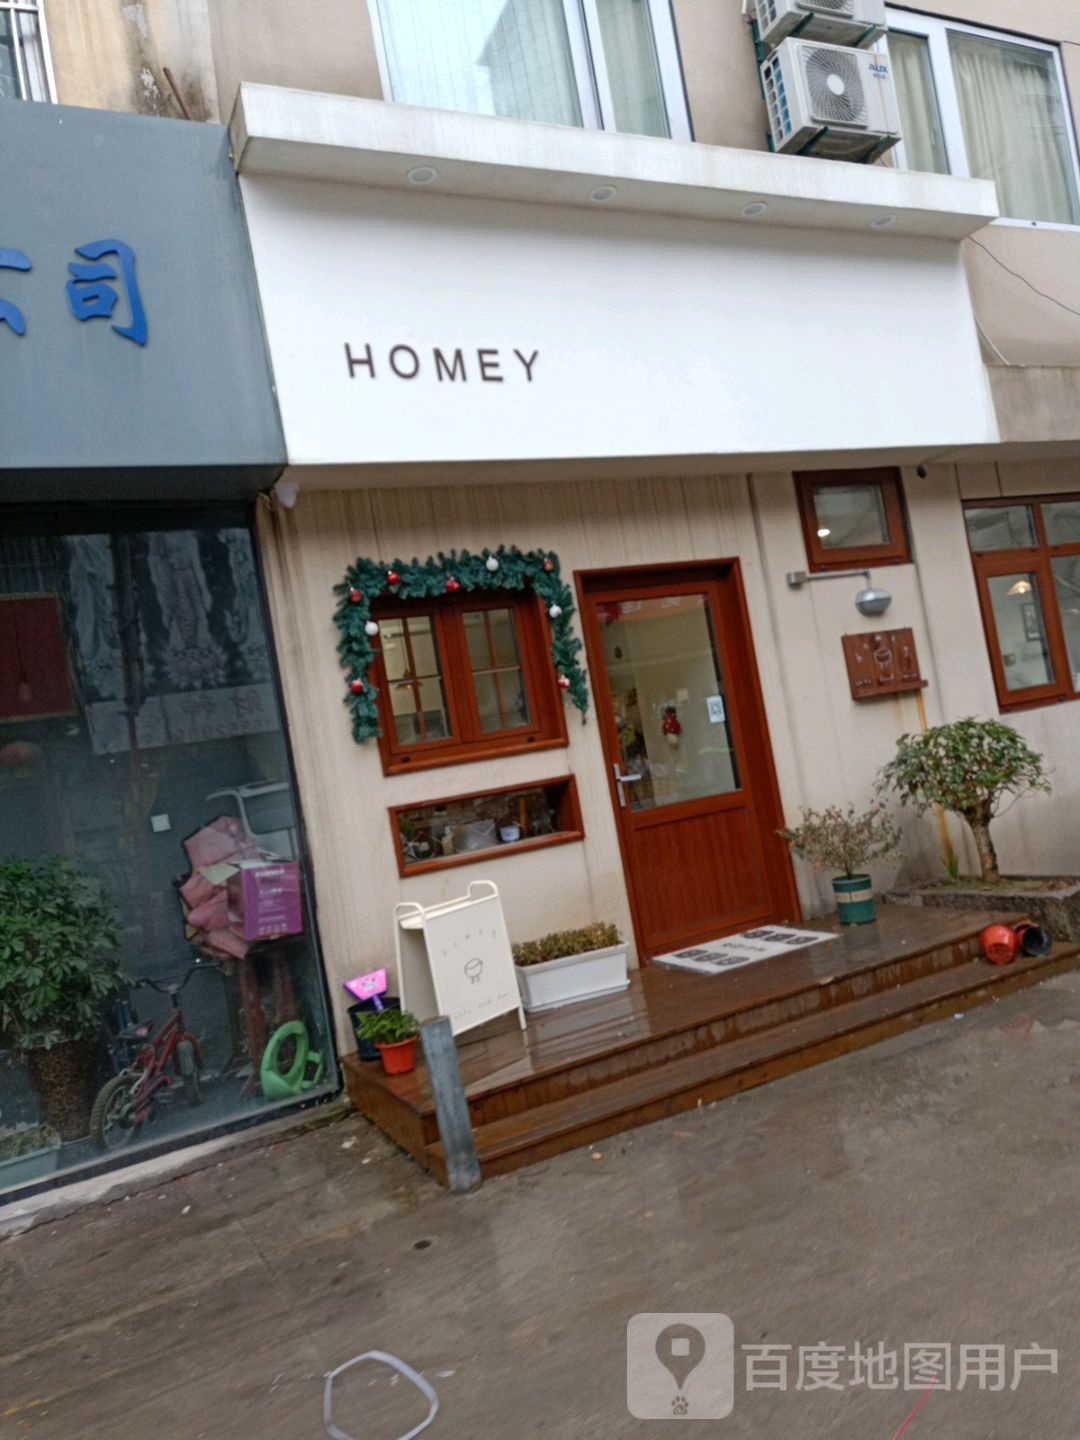 homey·cafe food moos